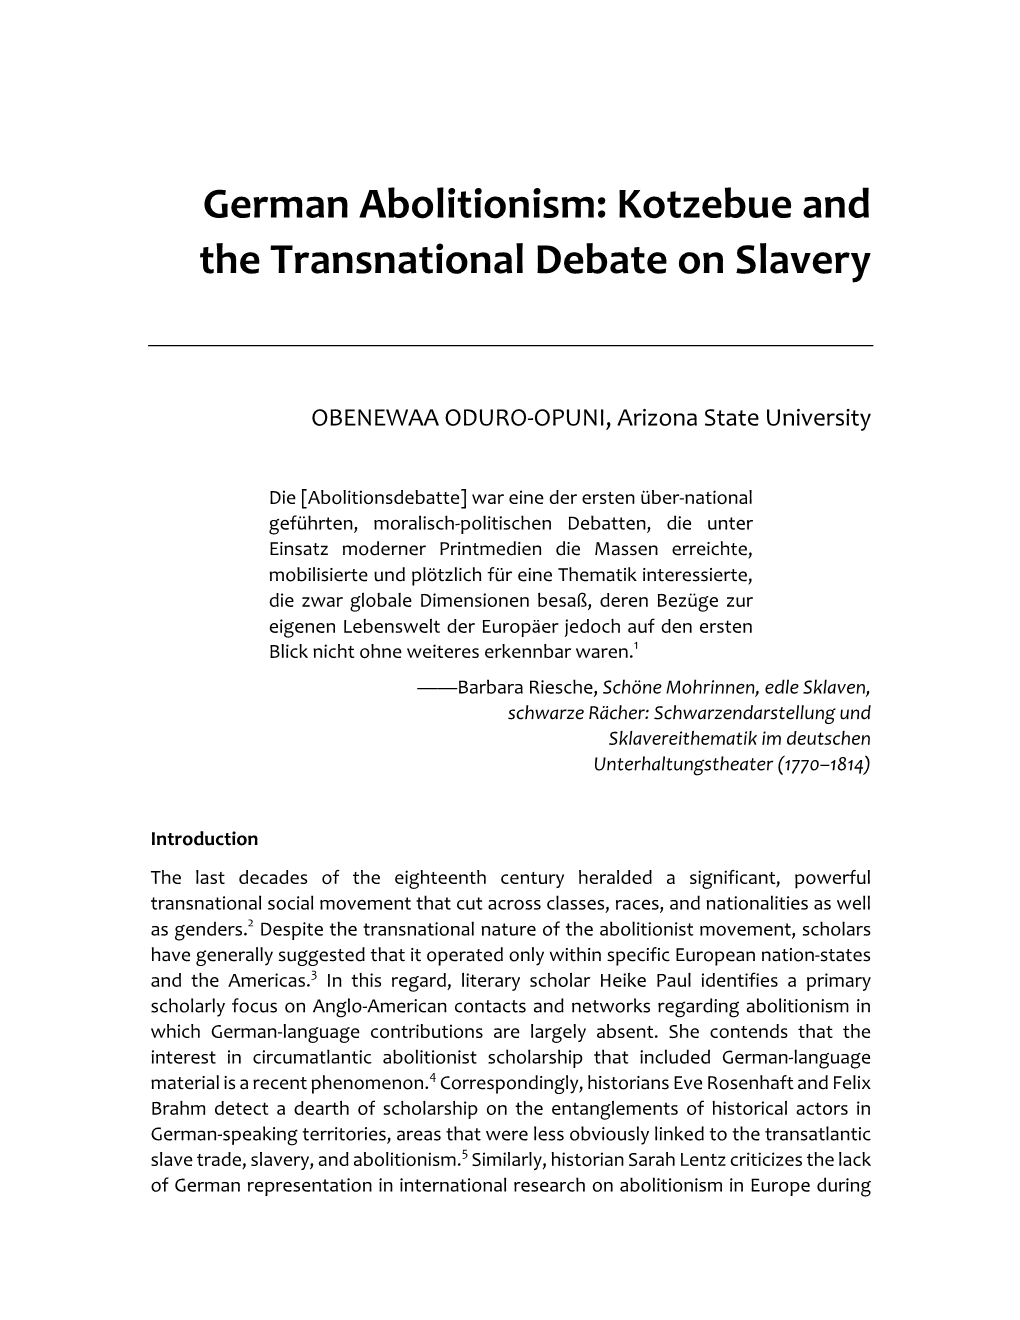 German Abolitionism: Kotzebue and the Transnational Debate on Slavery